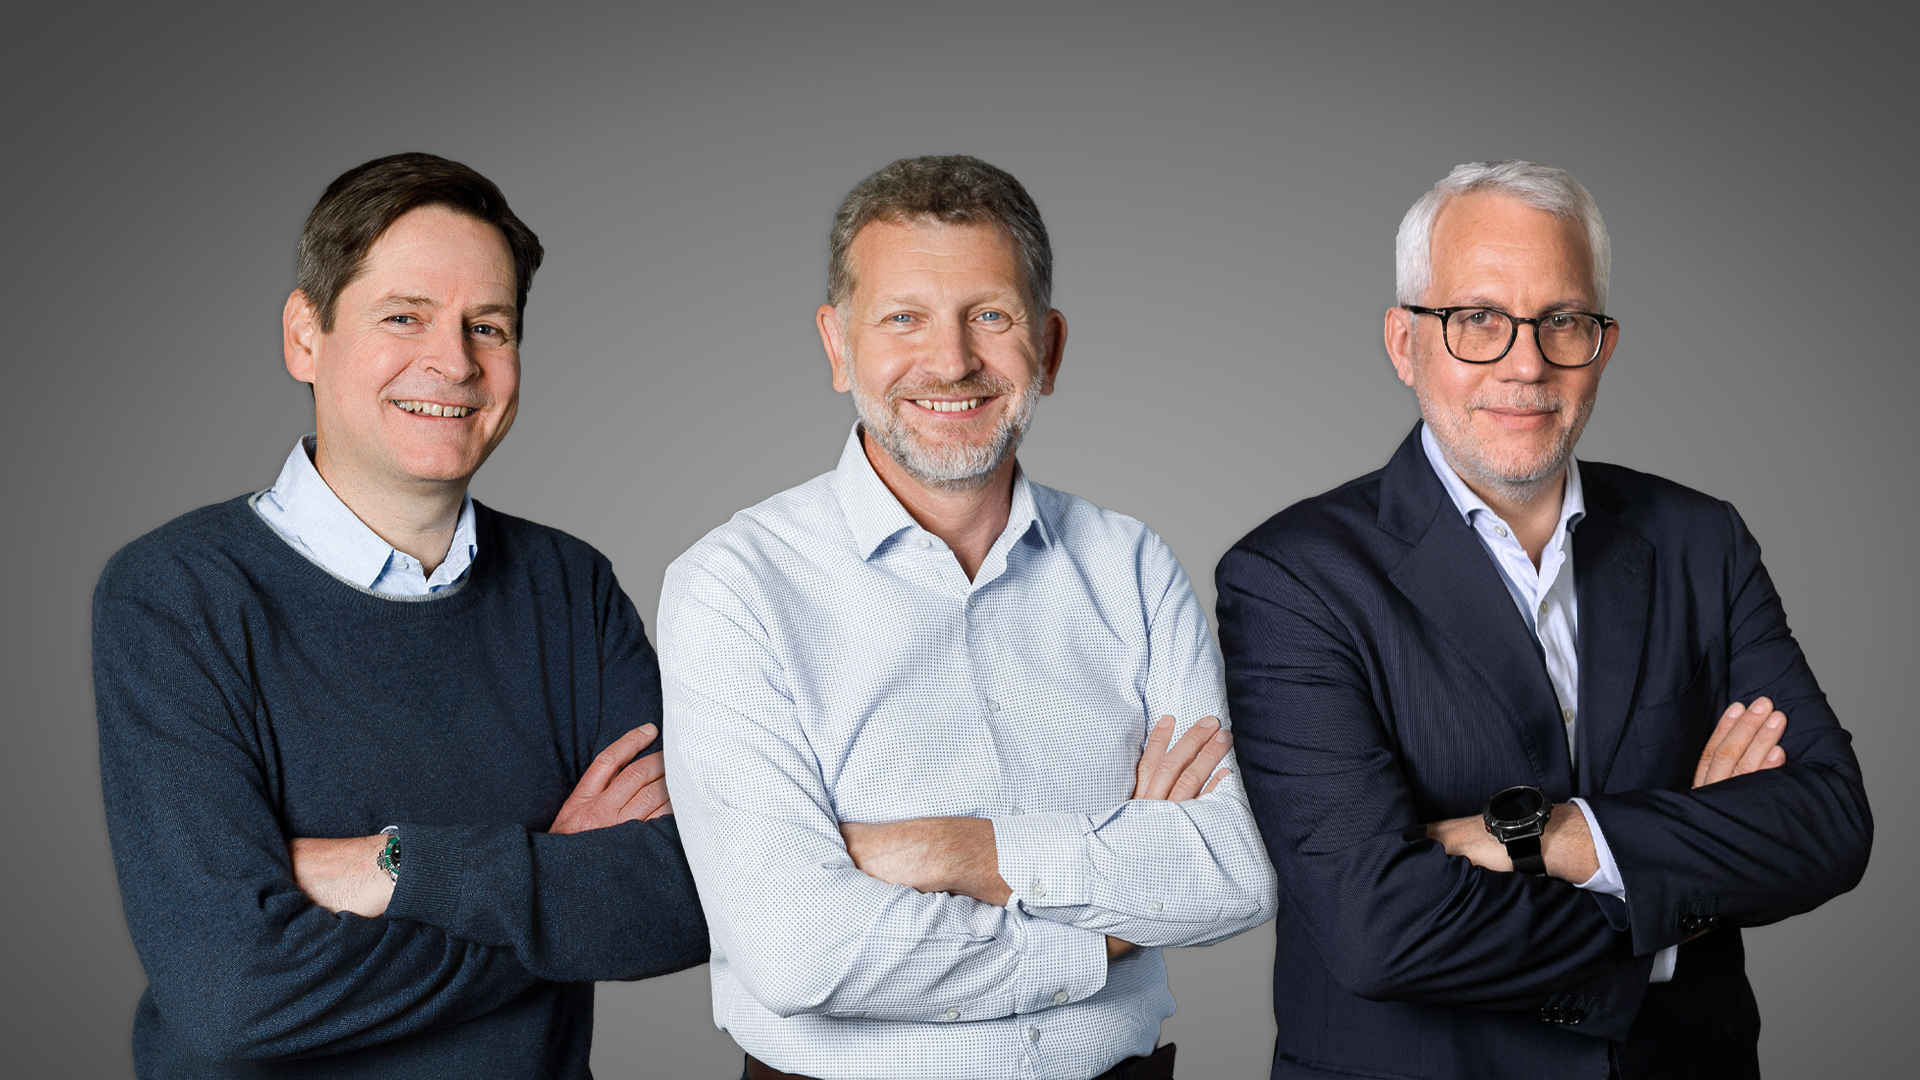 Pär Lange, Stefan Kuentz and Alexander Schläpfer of Swisscom Ventures